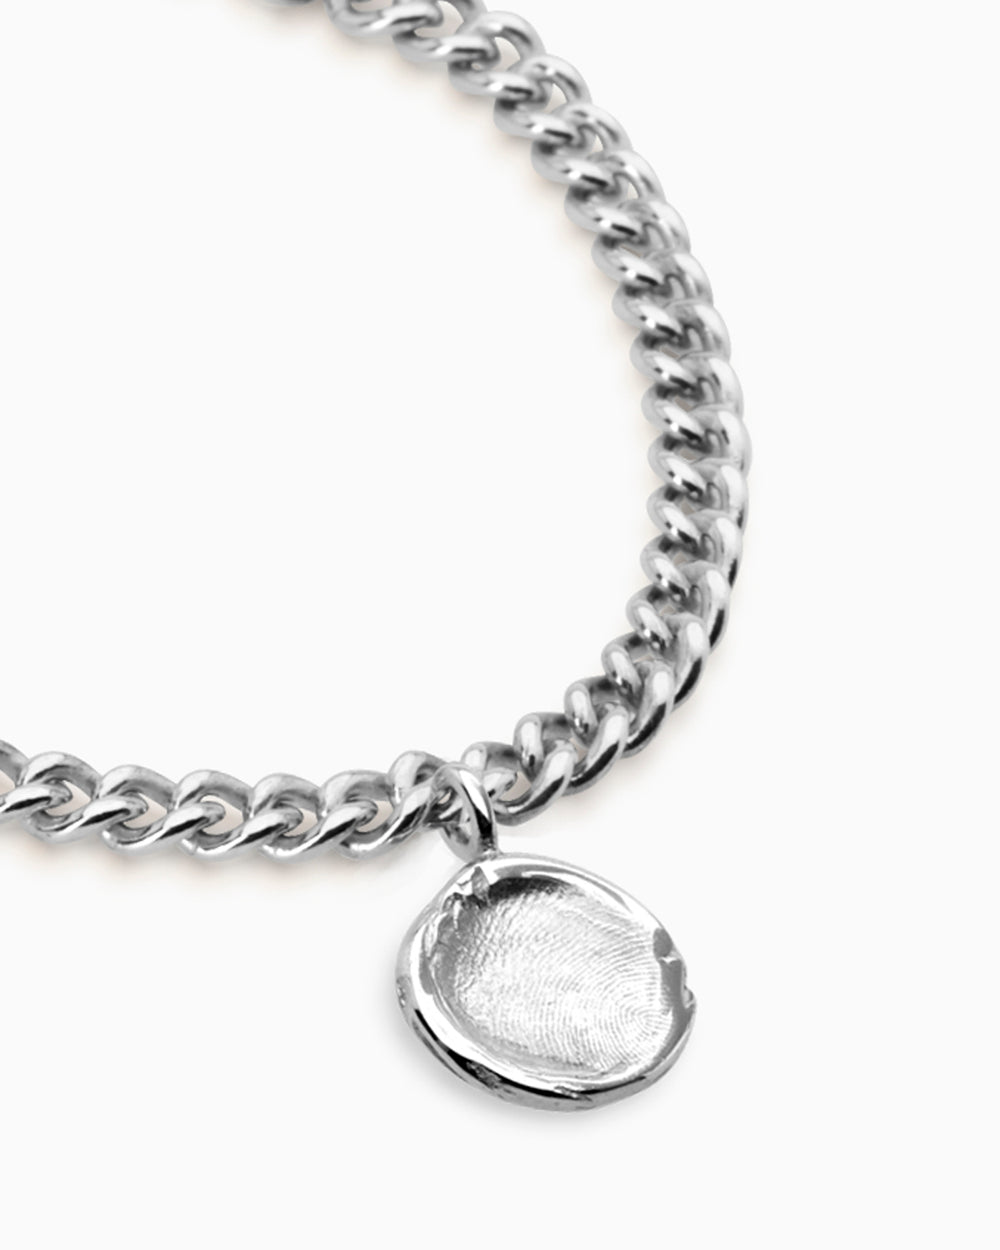 Impression Charm Bracelet | Silver